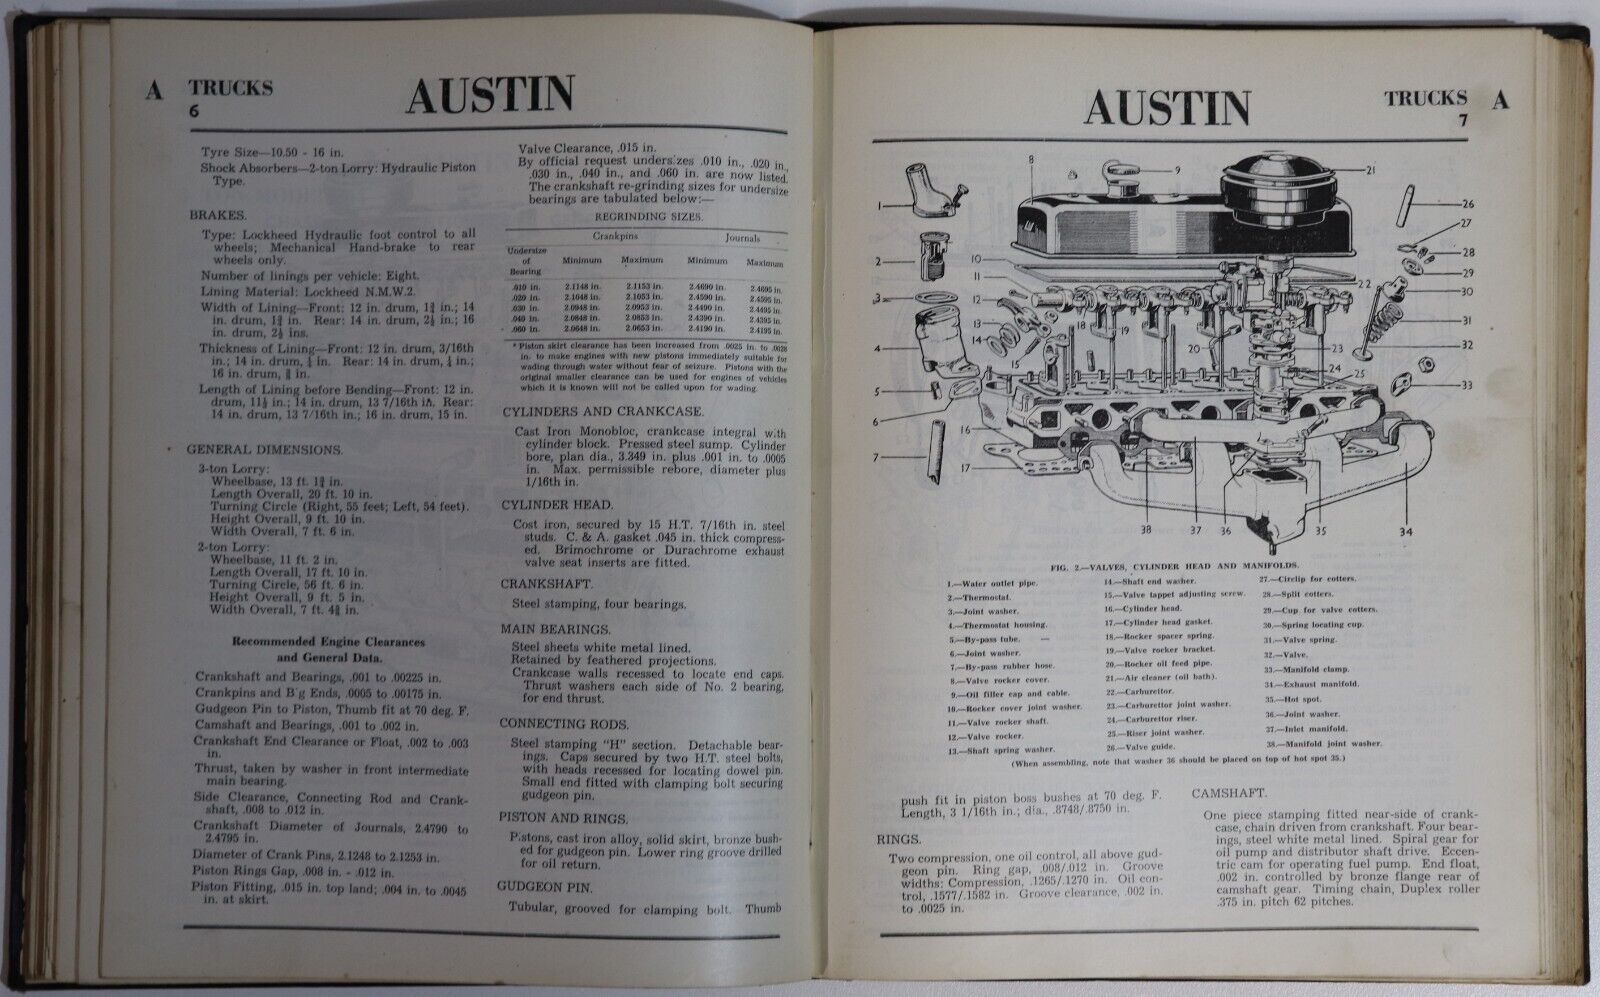 British Repair Manual: Cars & Trucks Vol. 3 - 1947 - Antique Automotive Book